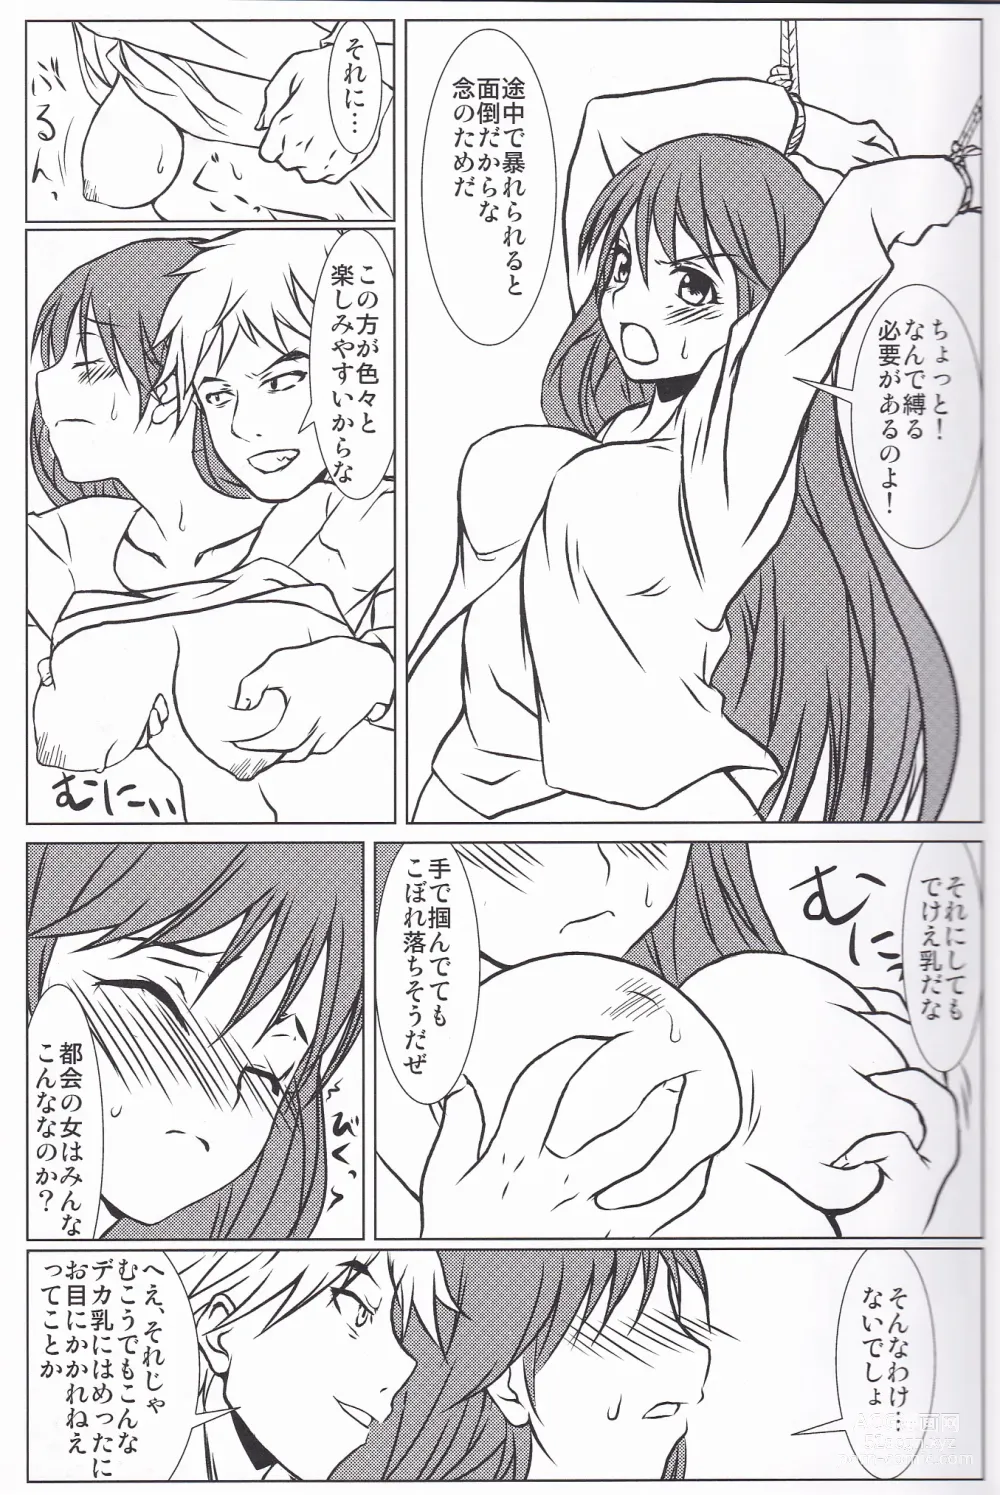 Page 8 of doujinshi Hibi no Uta